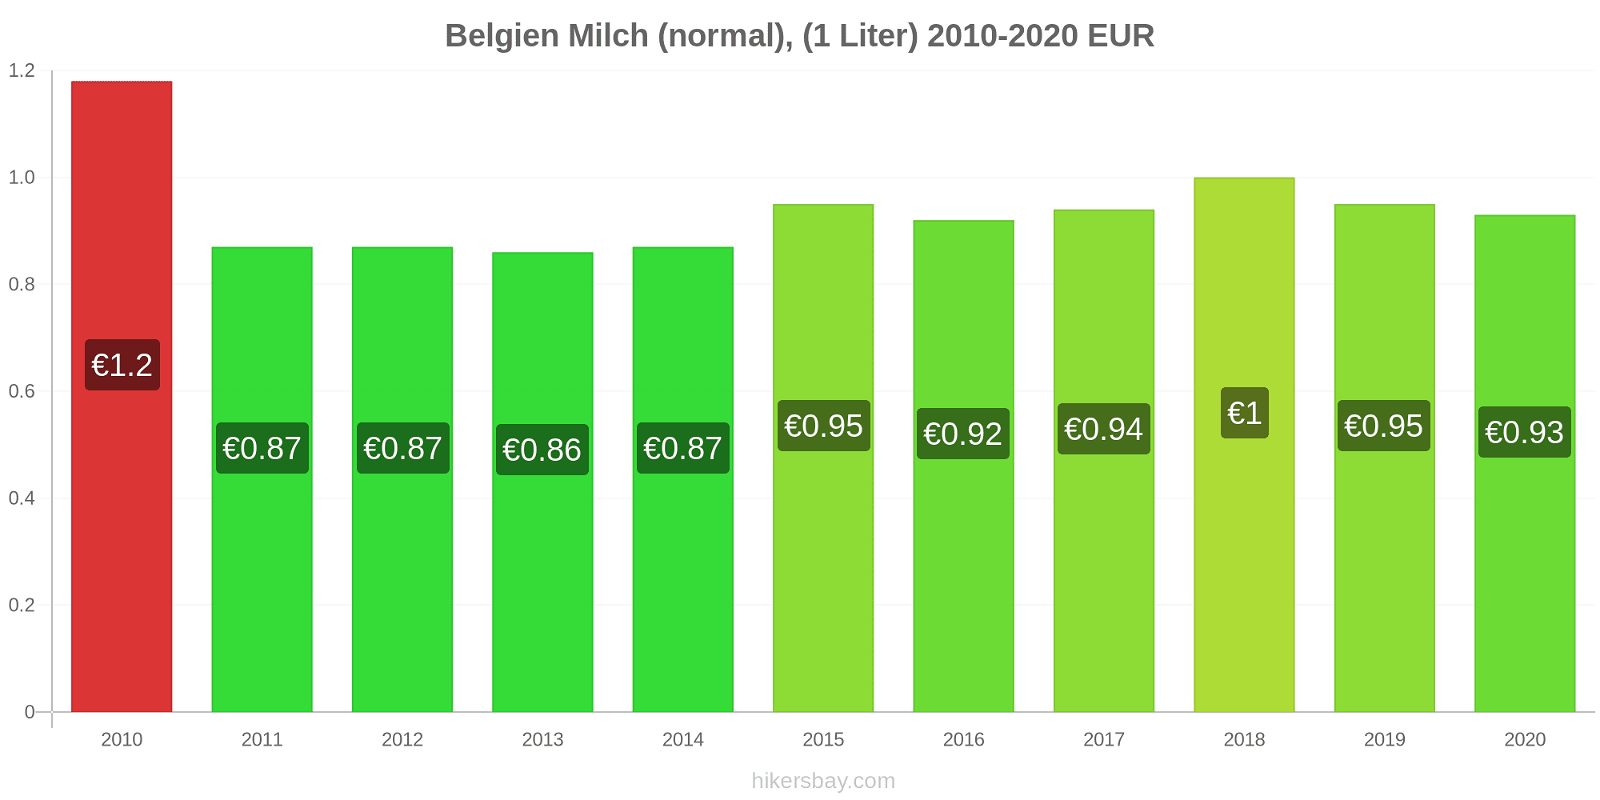 Belgien Preisänderungen (Regulär), Milch (1 Liter) hikersbay.com